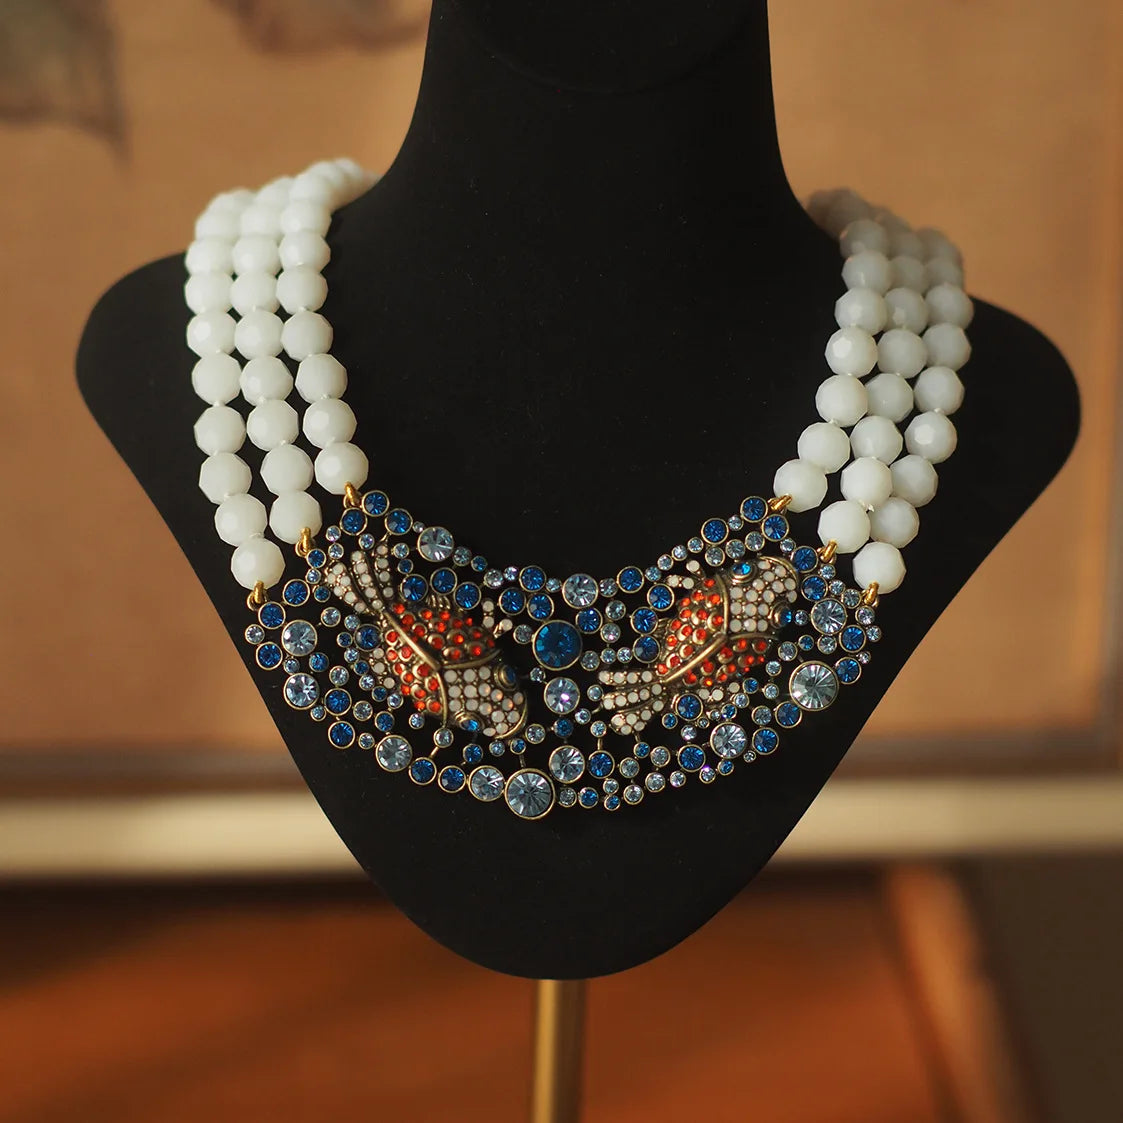 Diamond-Encrusted Carp Necklace with European Vintage Design